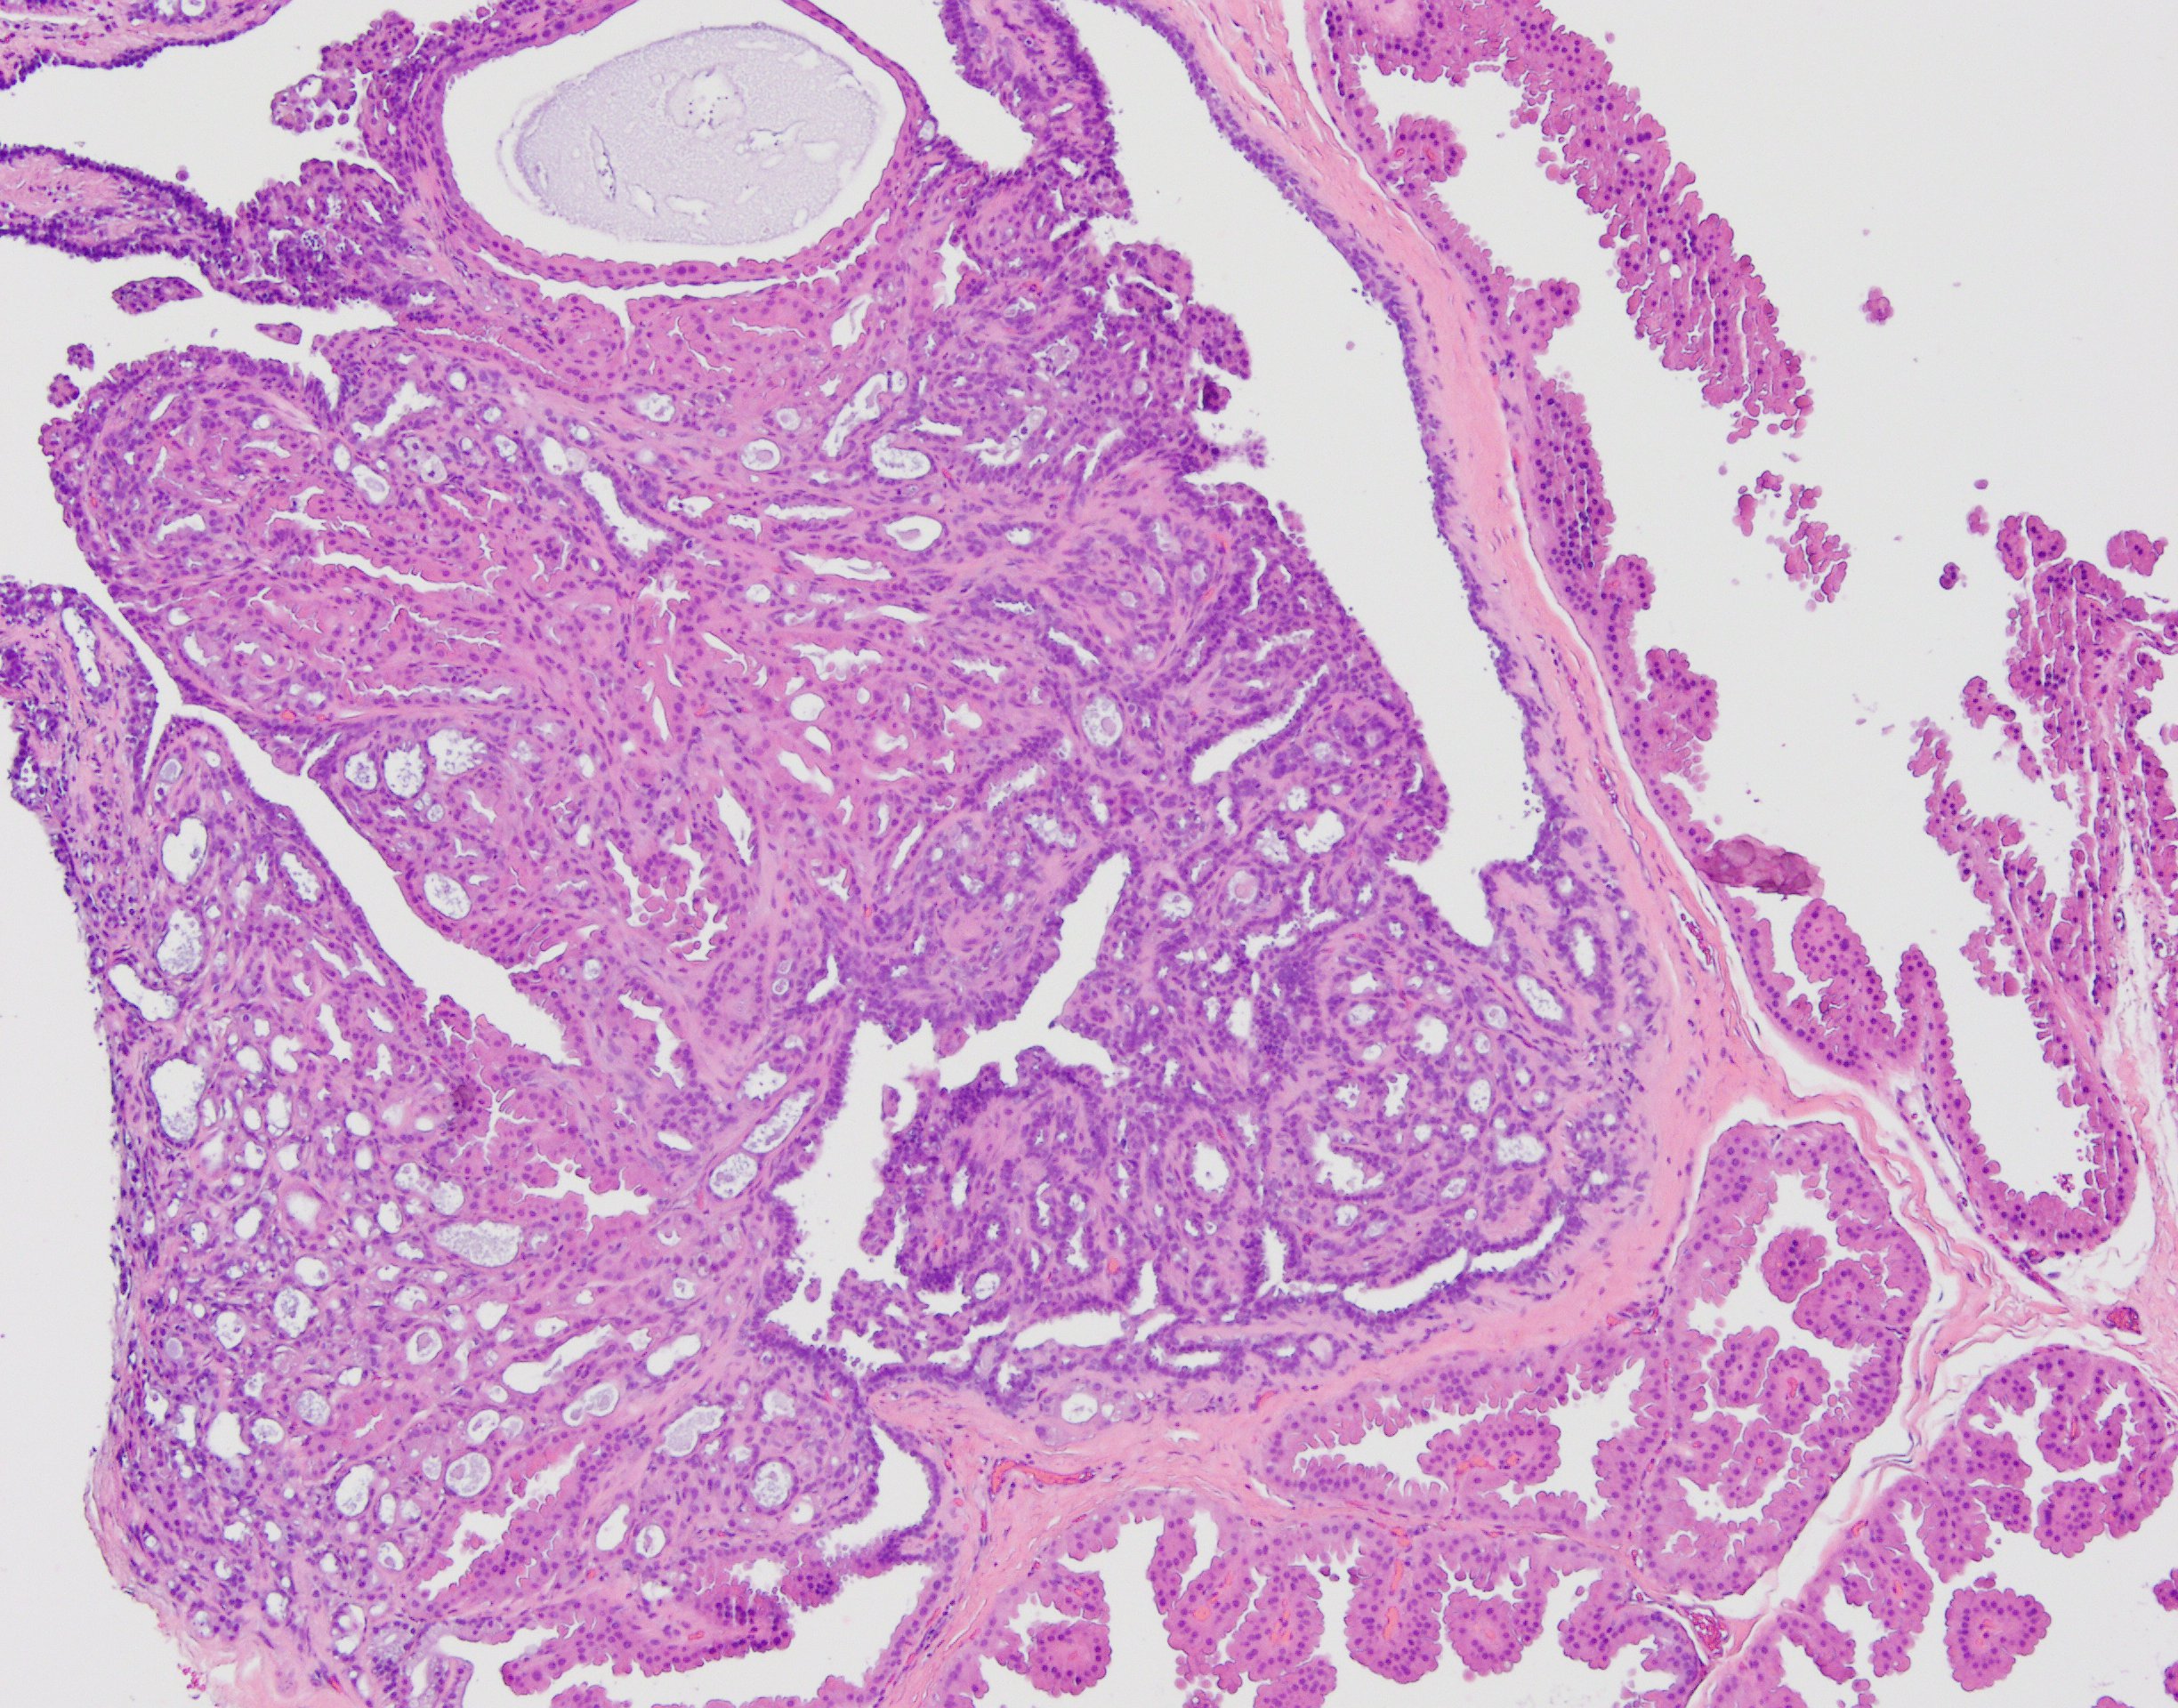 Atypical papillary neoplasm - Papillary lesion with apocrine metaplasia